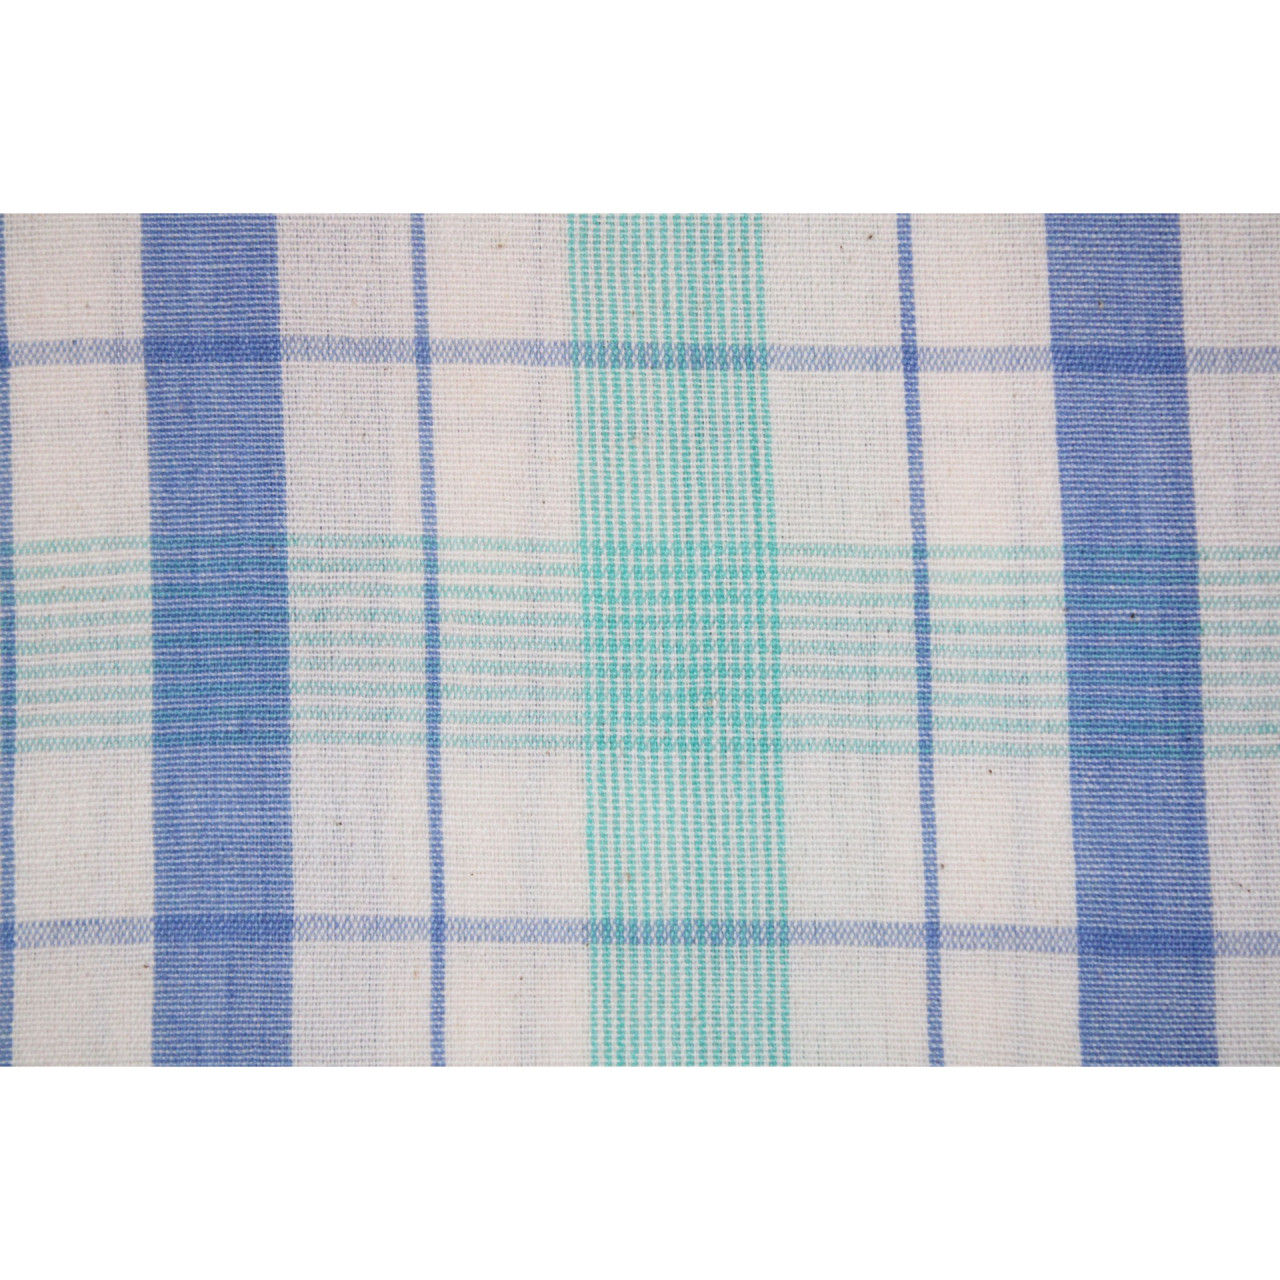 (1529) Cotton Azo-free dyed yardage from Phulia - Sea green, blue, white, horizontal stripes